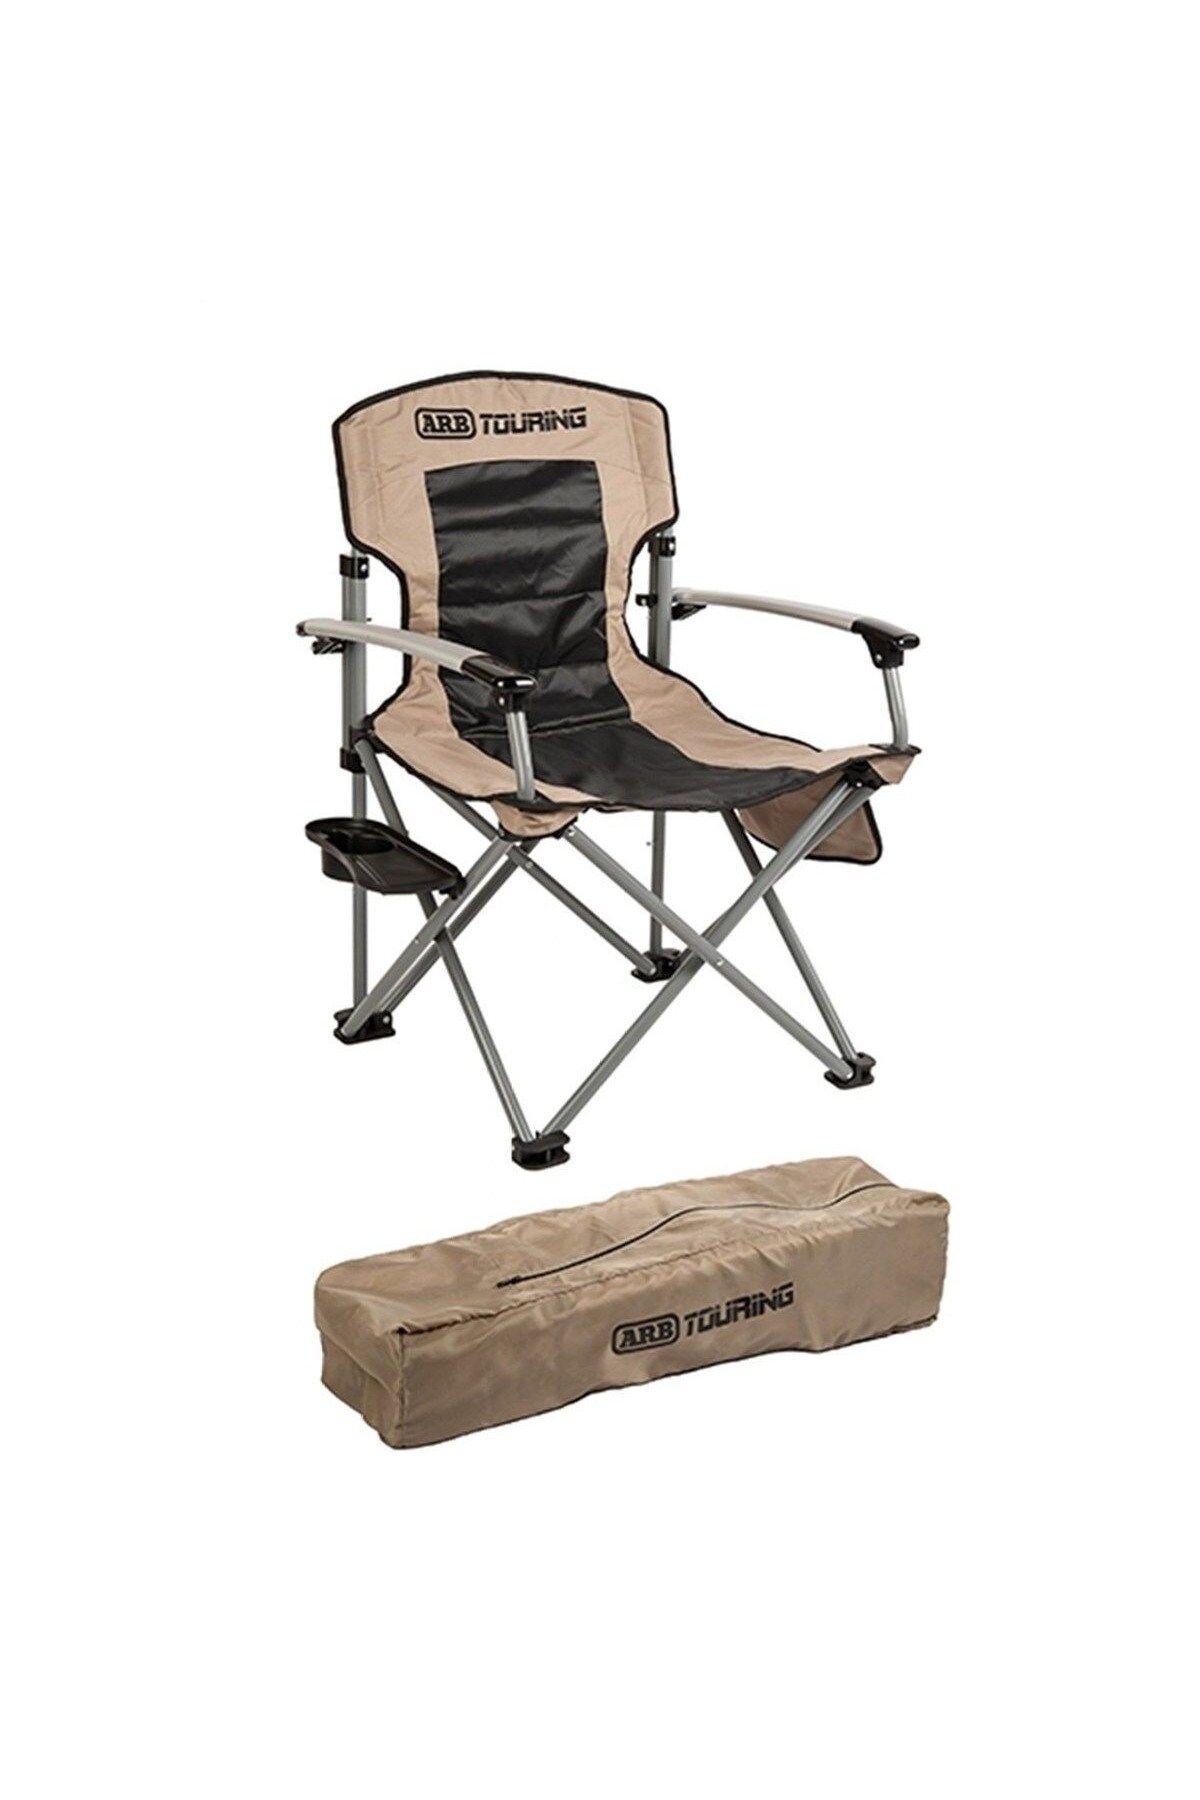 ARB Touring Outdoor Taşıma Çantalı Kamp Sandalyesi (150 KG KAPASİTELİ)